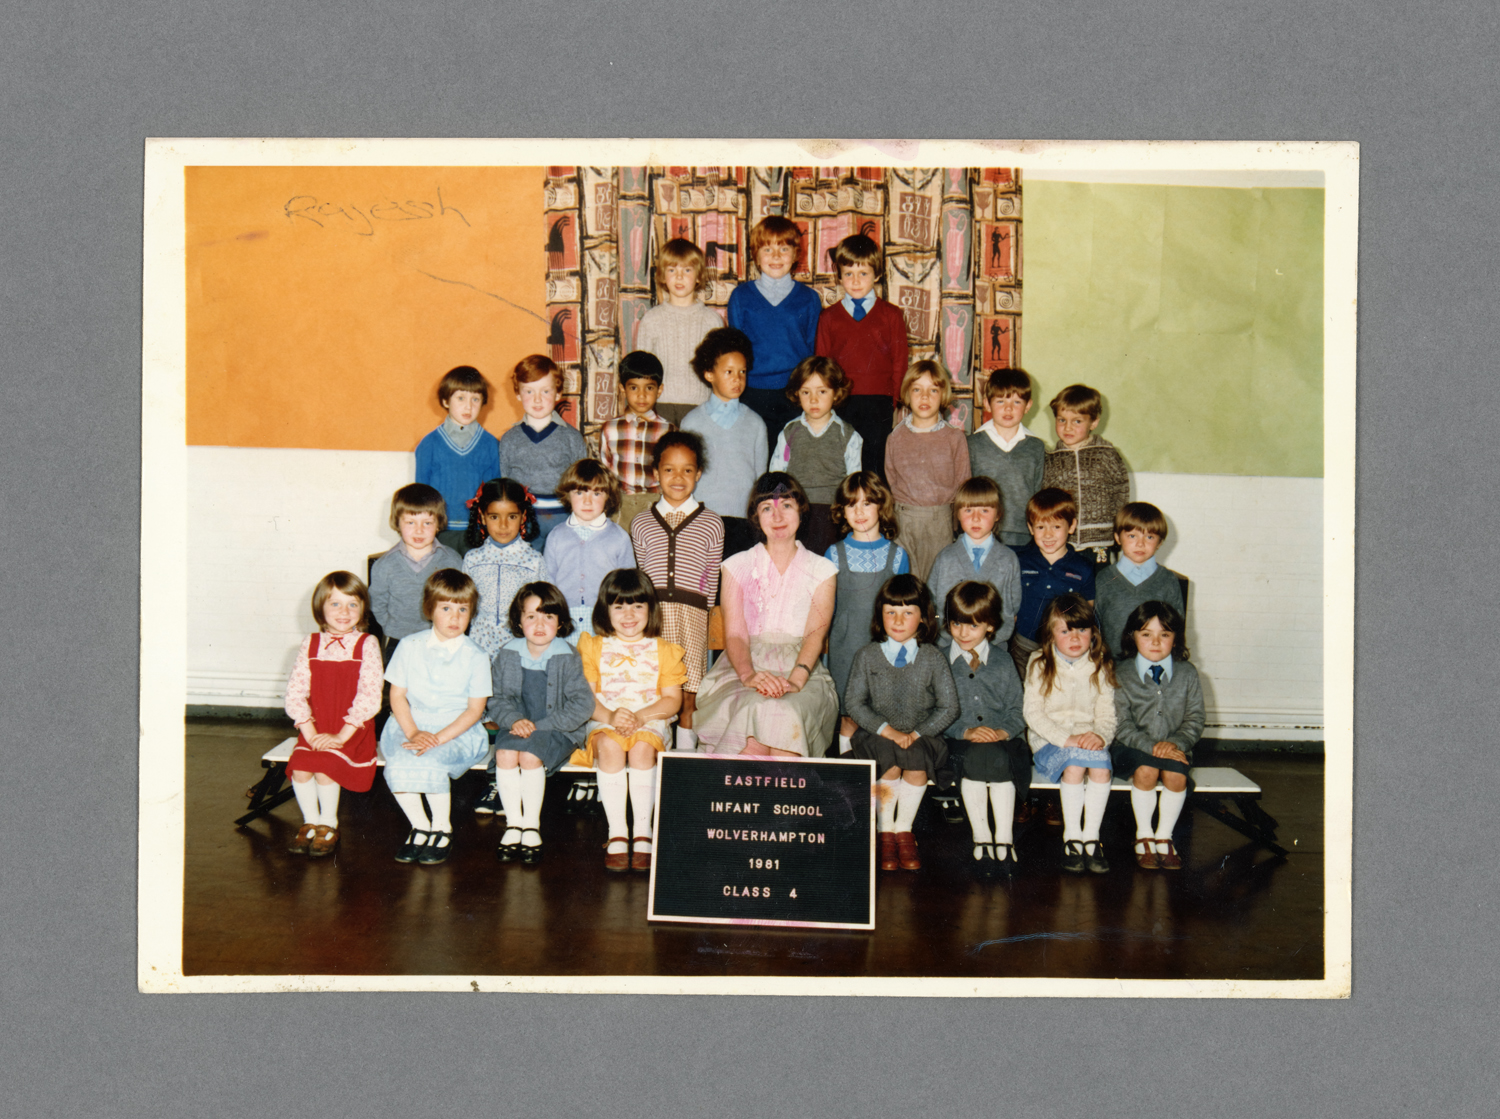 Eastfield Infant School c.1981